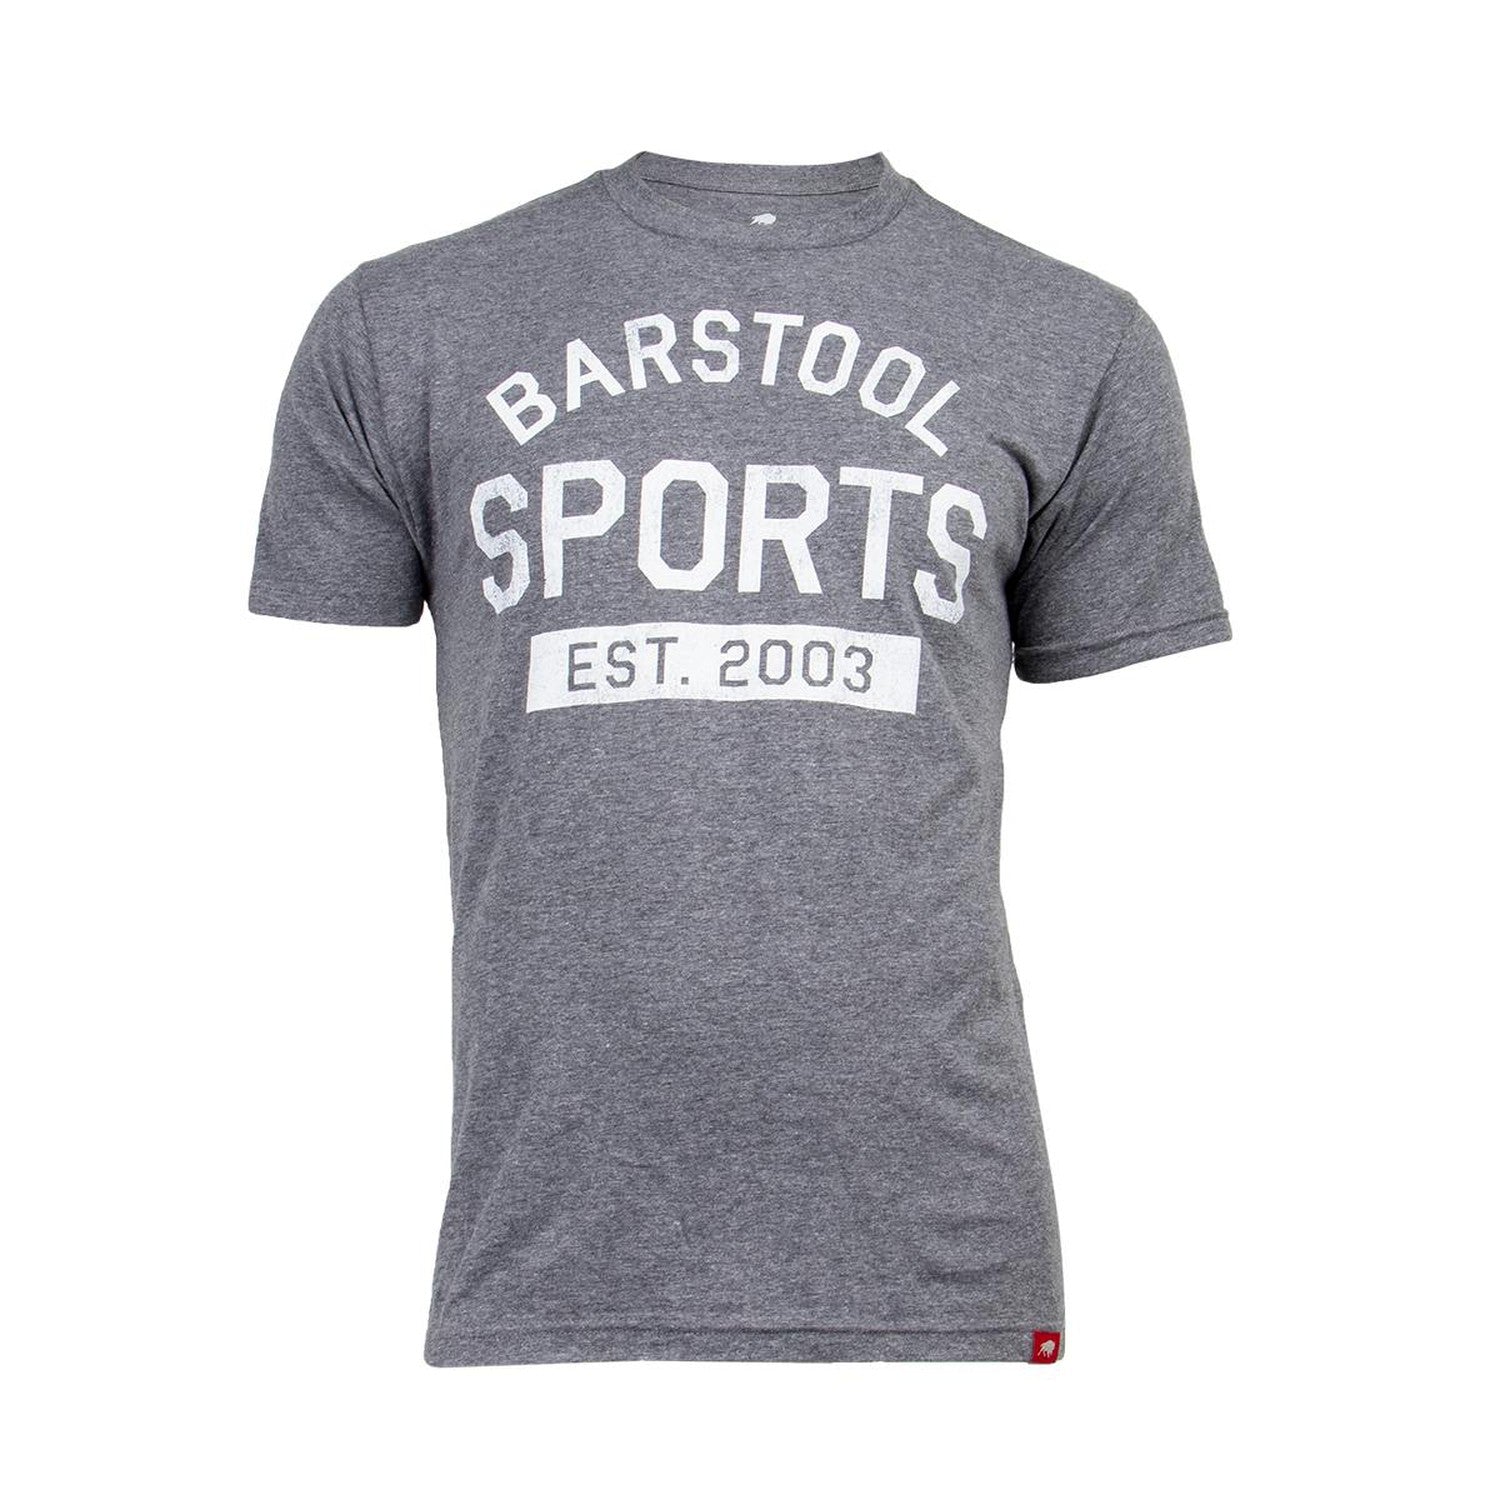 Barstool Sportiqe Comfy Tee-T-Shirts-Barstool Sports-Grey-S-Barstool Sports